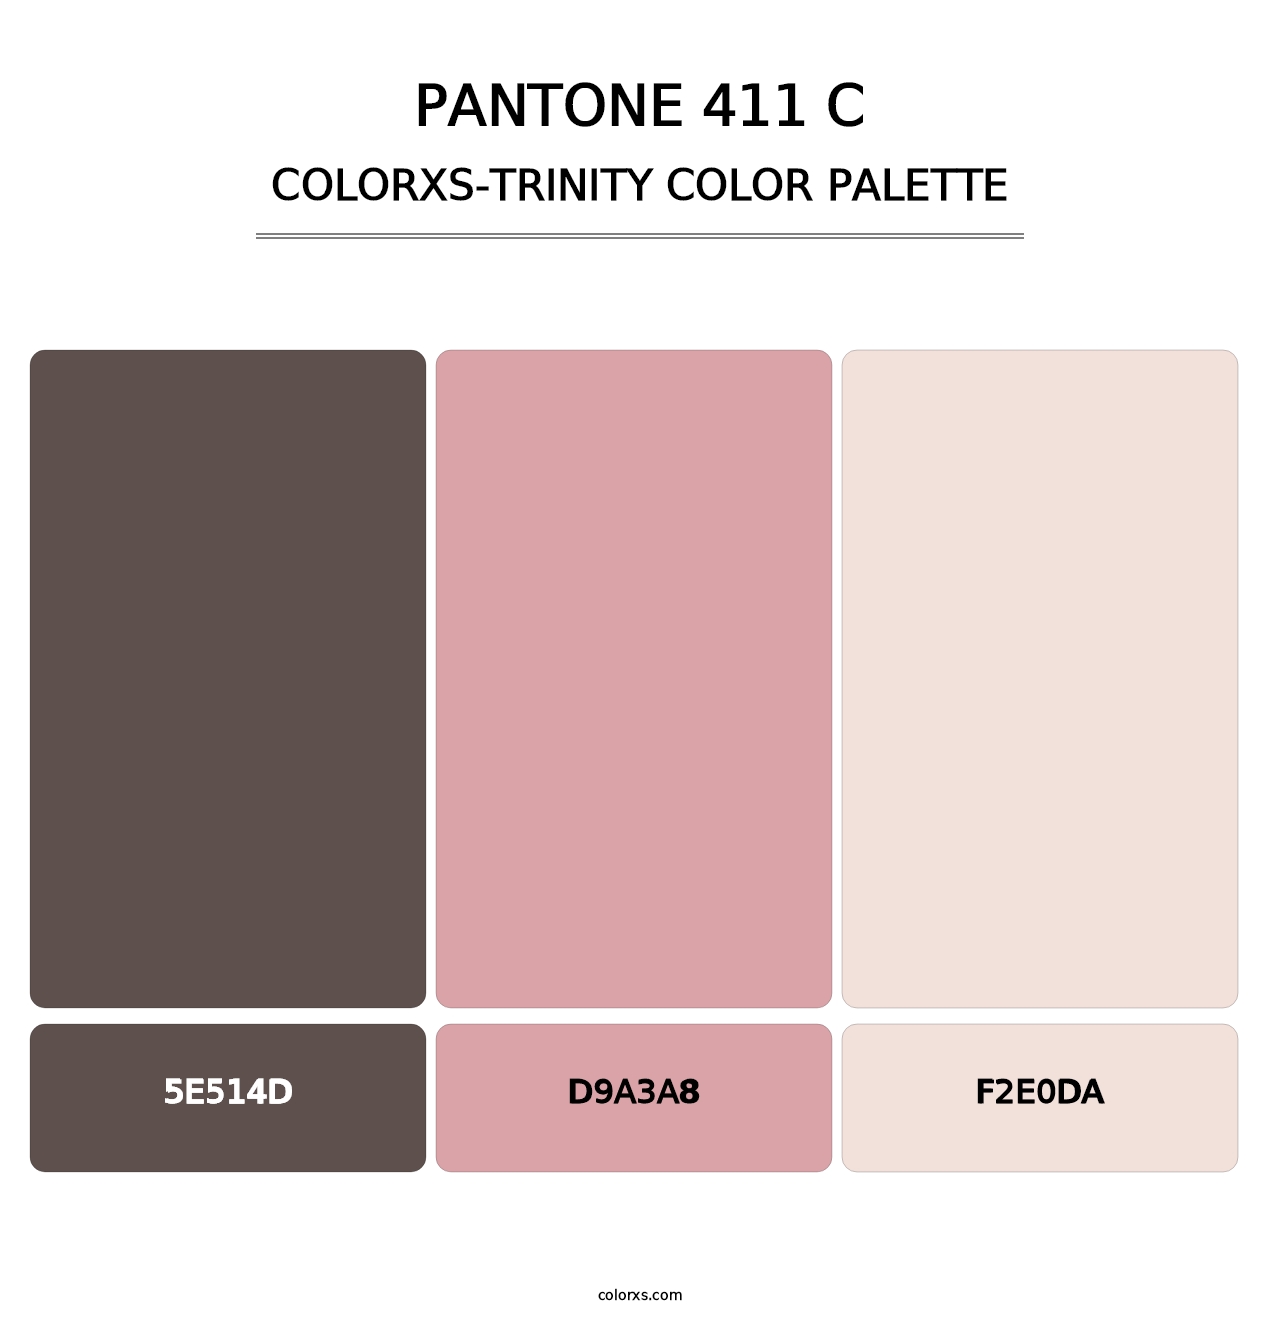 PANTONE 411 C - Colorxs Trinity Palette